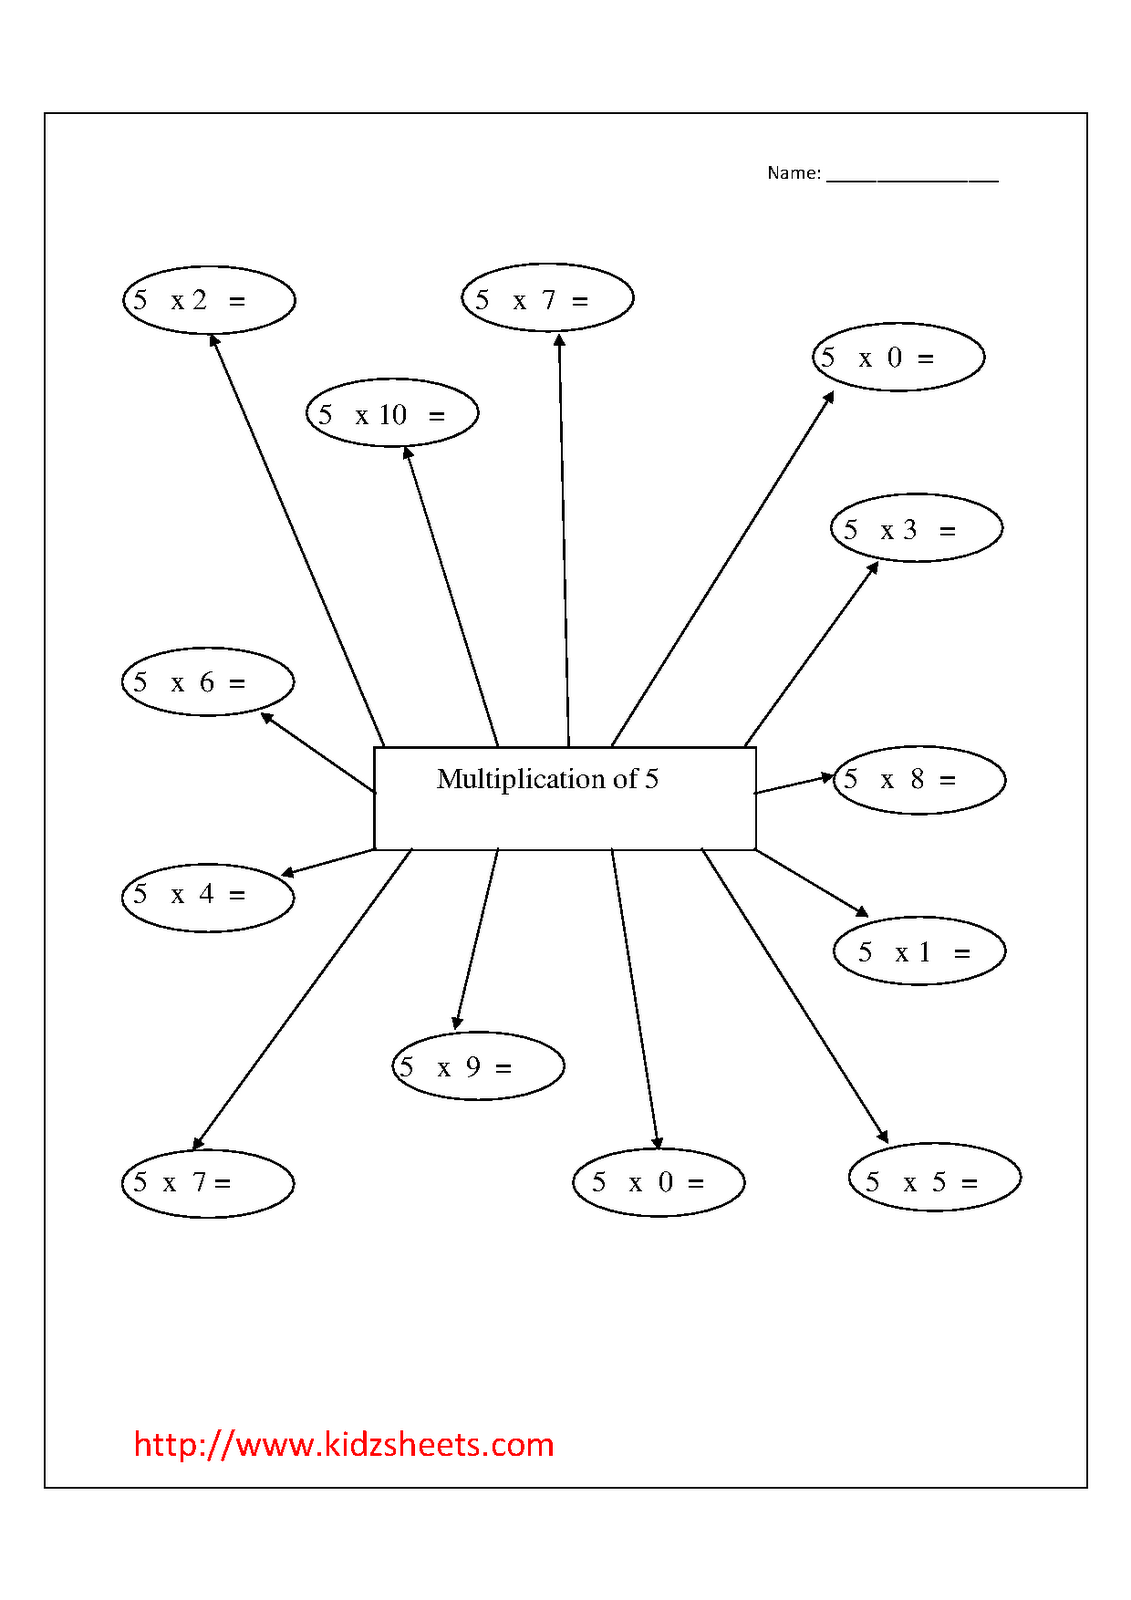 Kidz Worksheets: Second Grade Multiplication Table 5